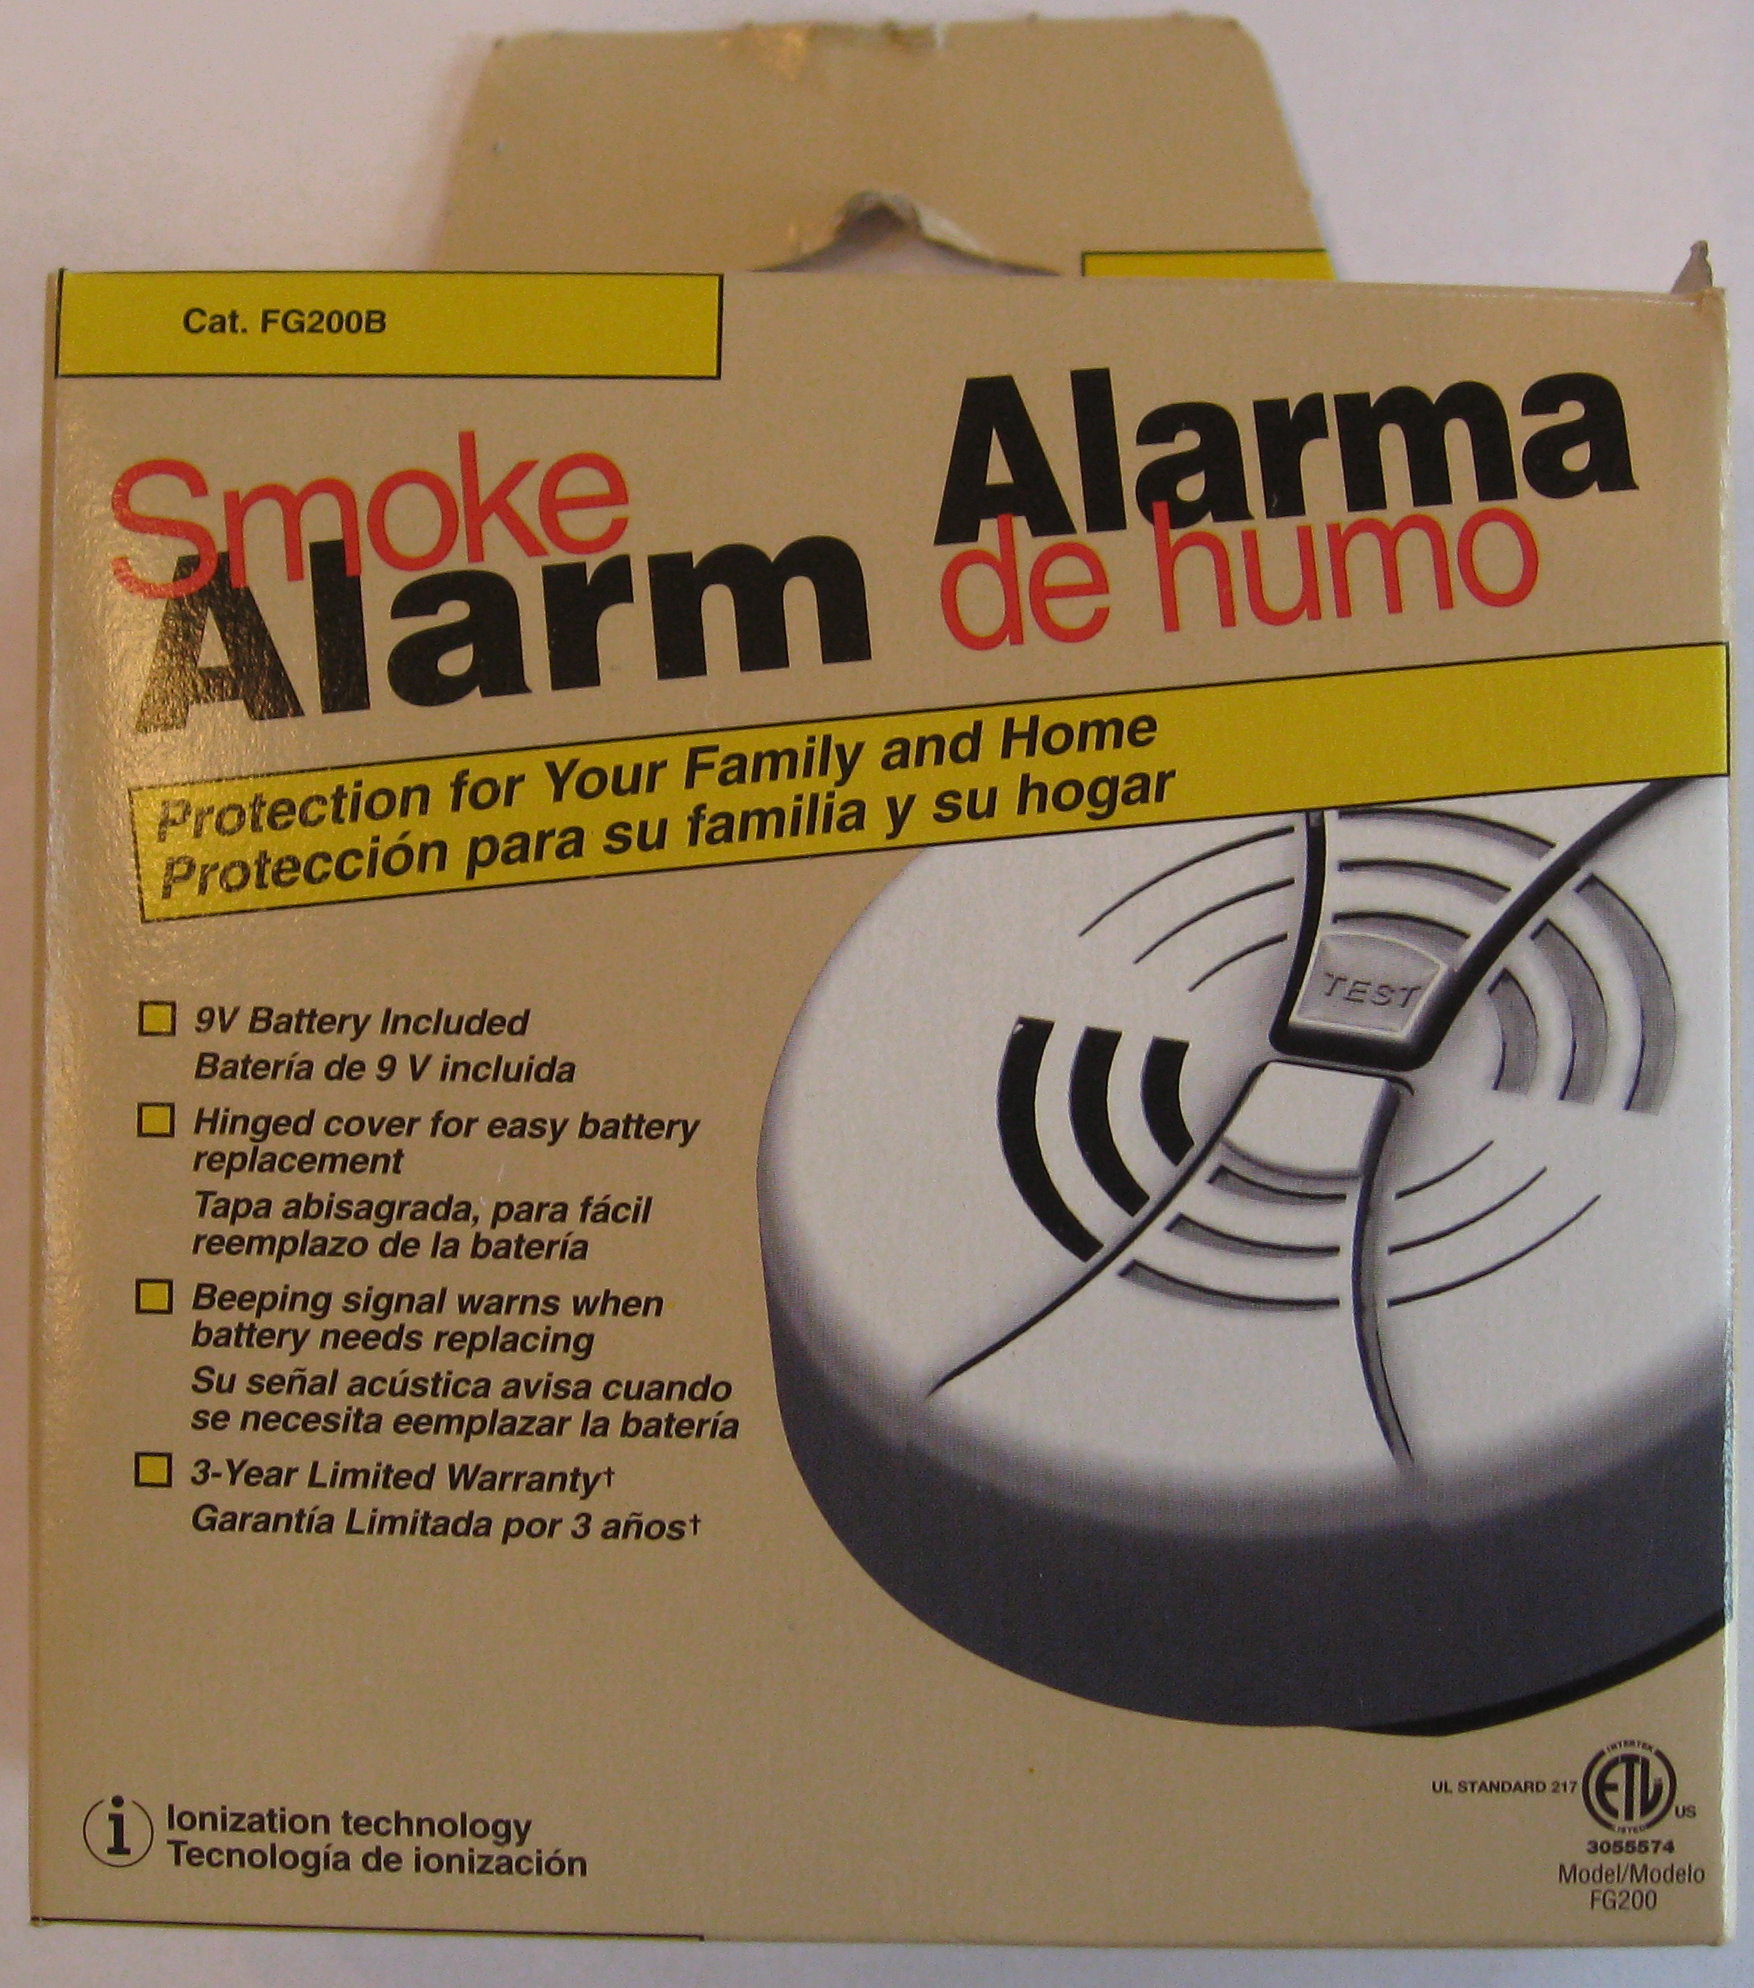 Smoke alarm